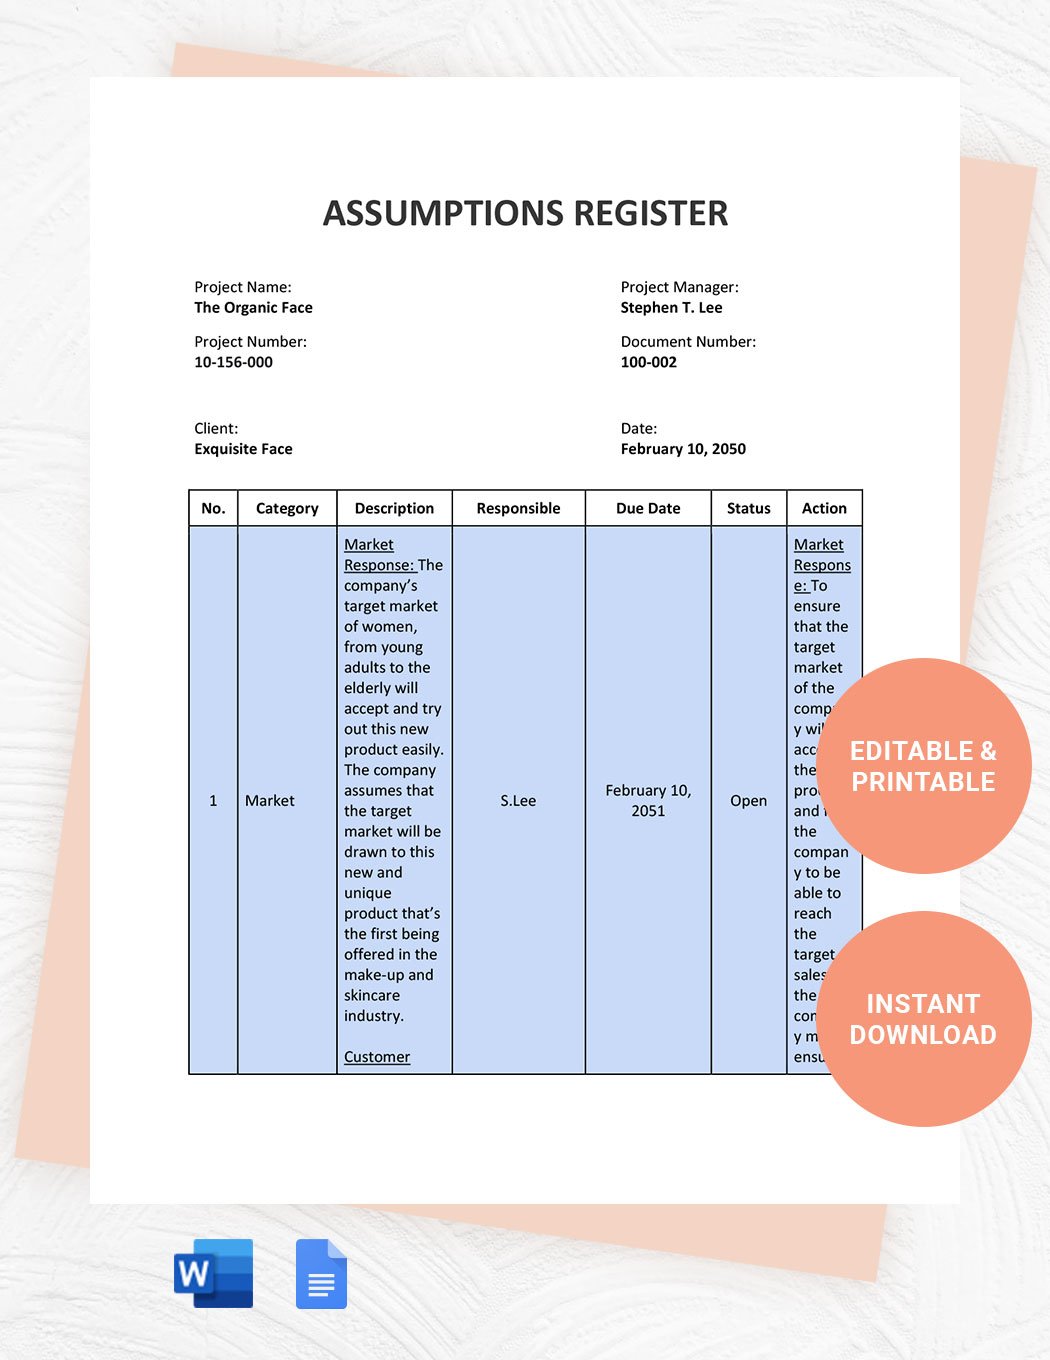 Assumptions Register Template in Word, Google Docs